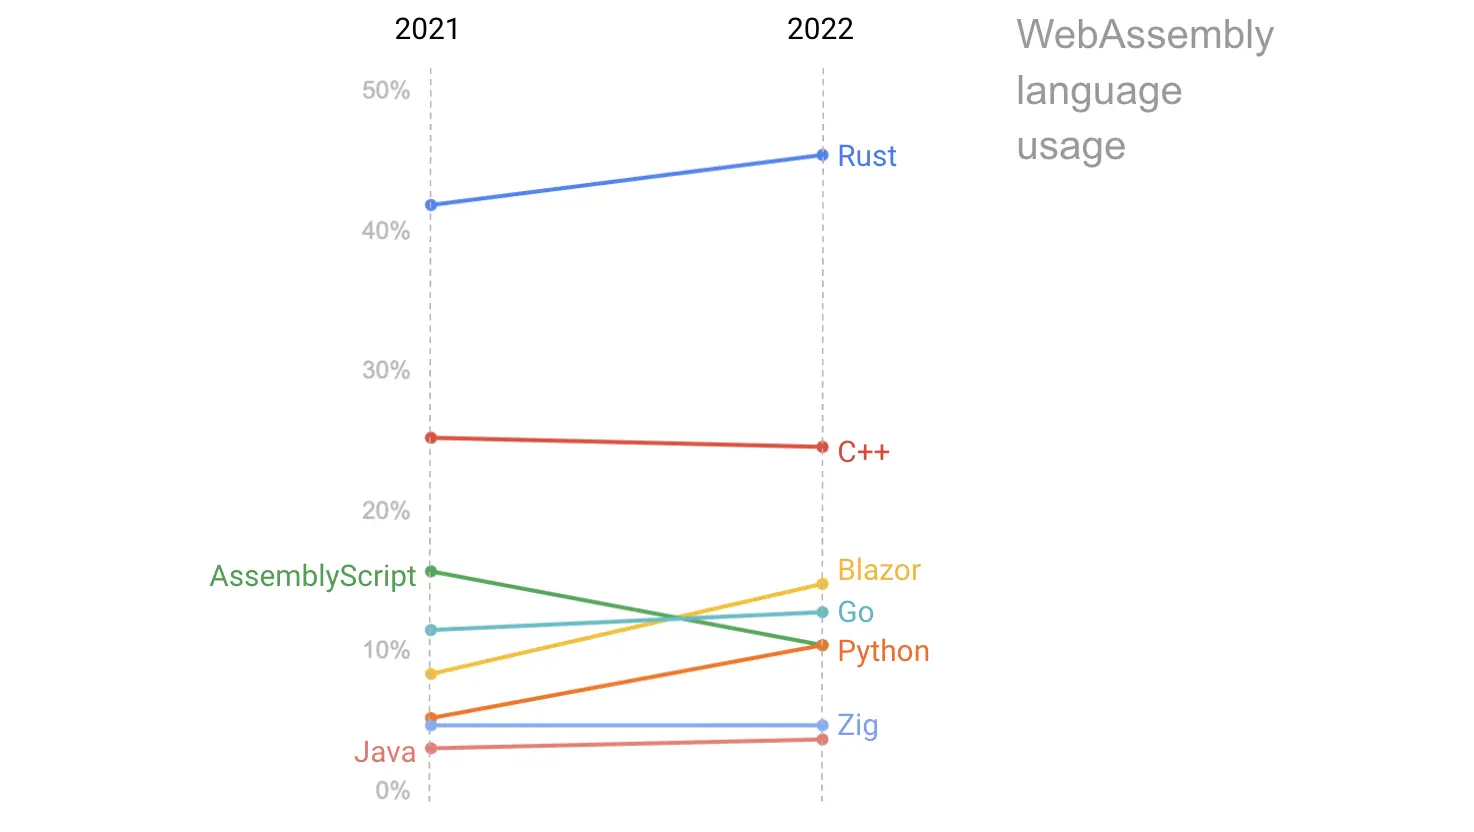 current WebAssembly language usage